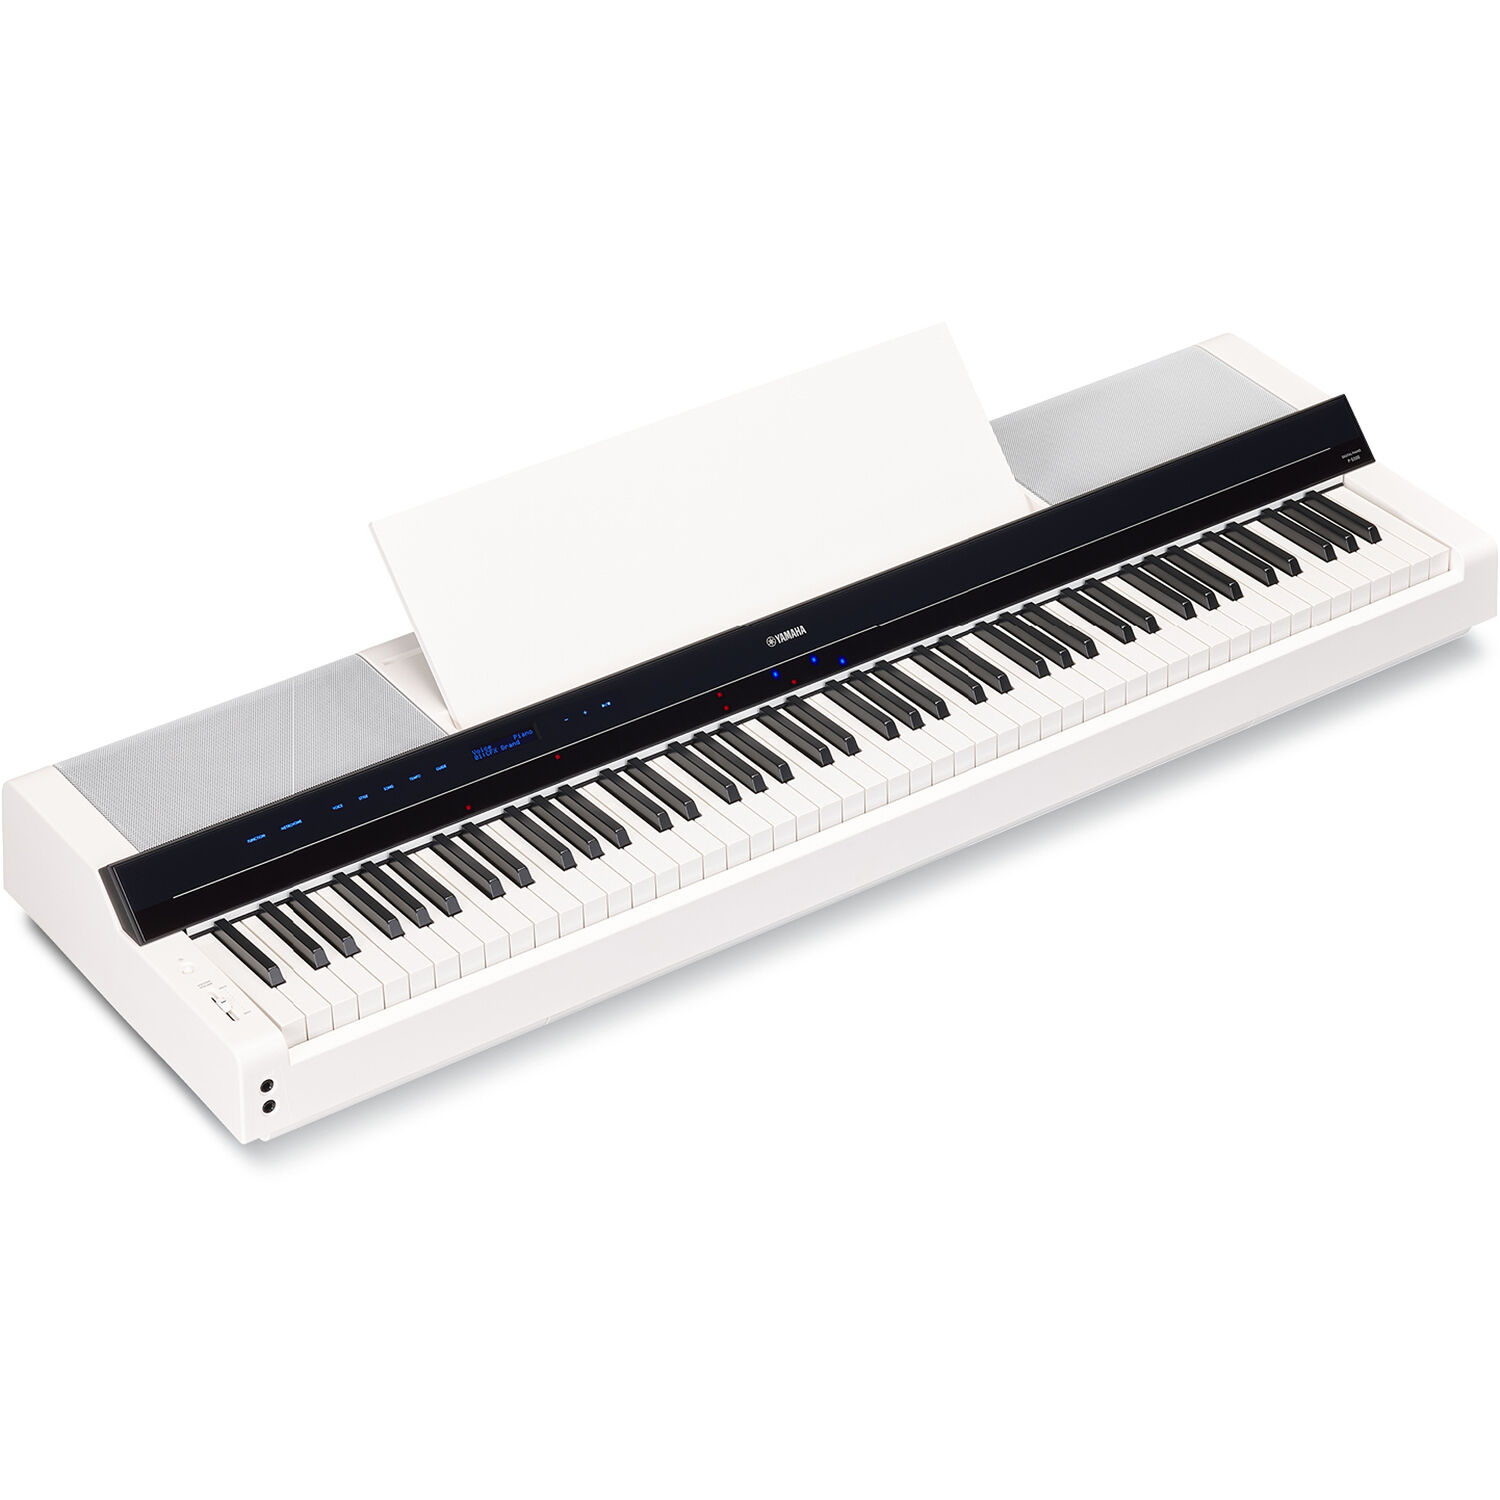 Piano Digital Portátil Yamaha P S500 de 88 Teclas Blanco